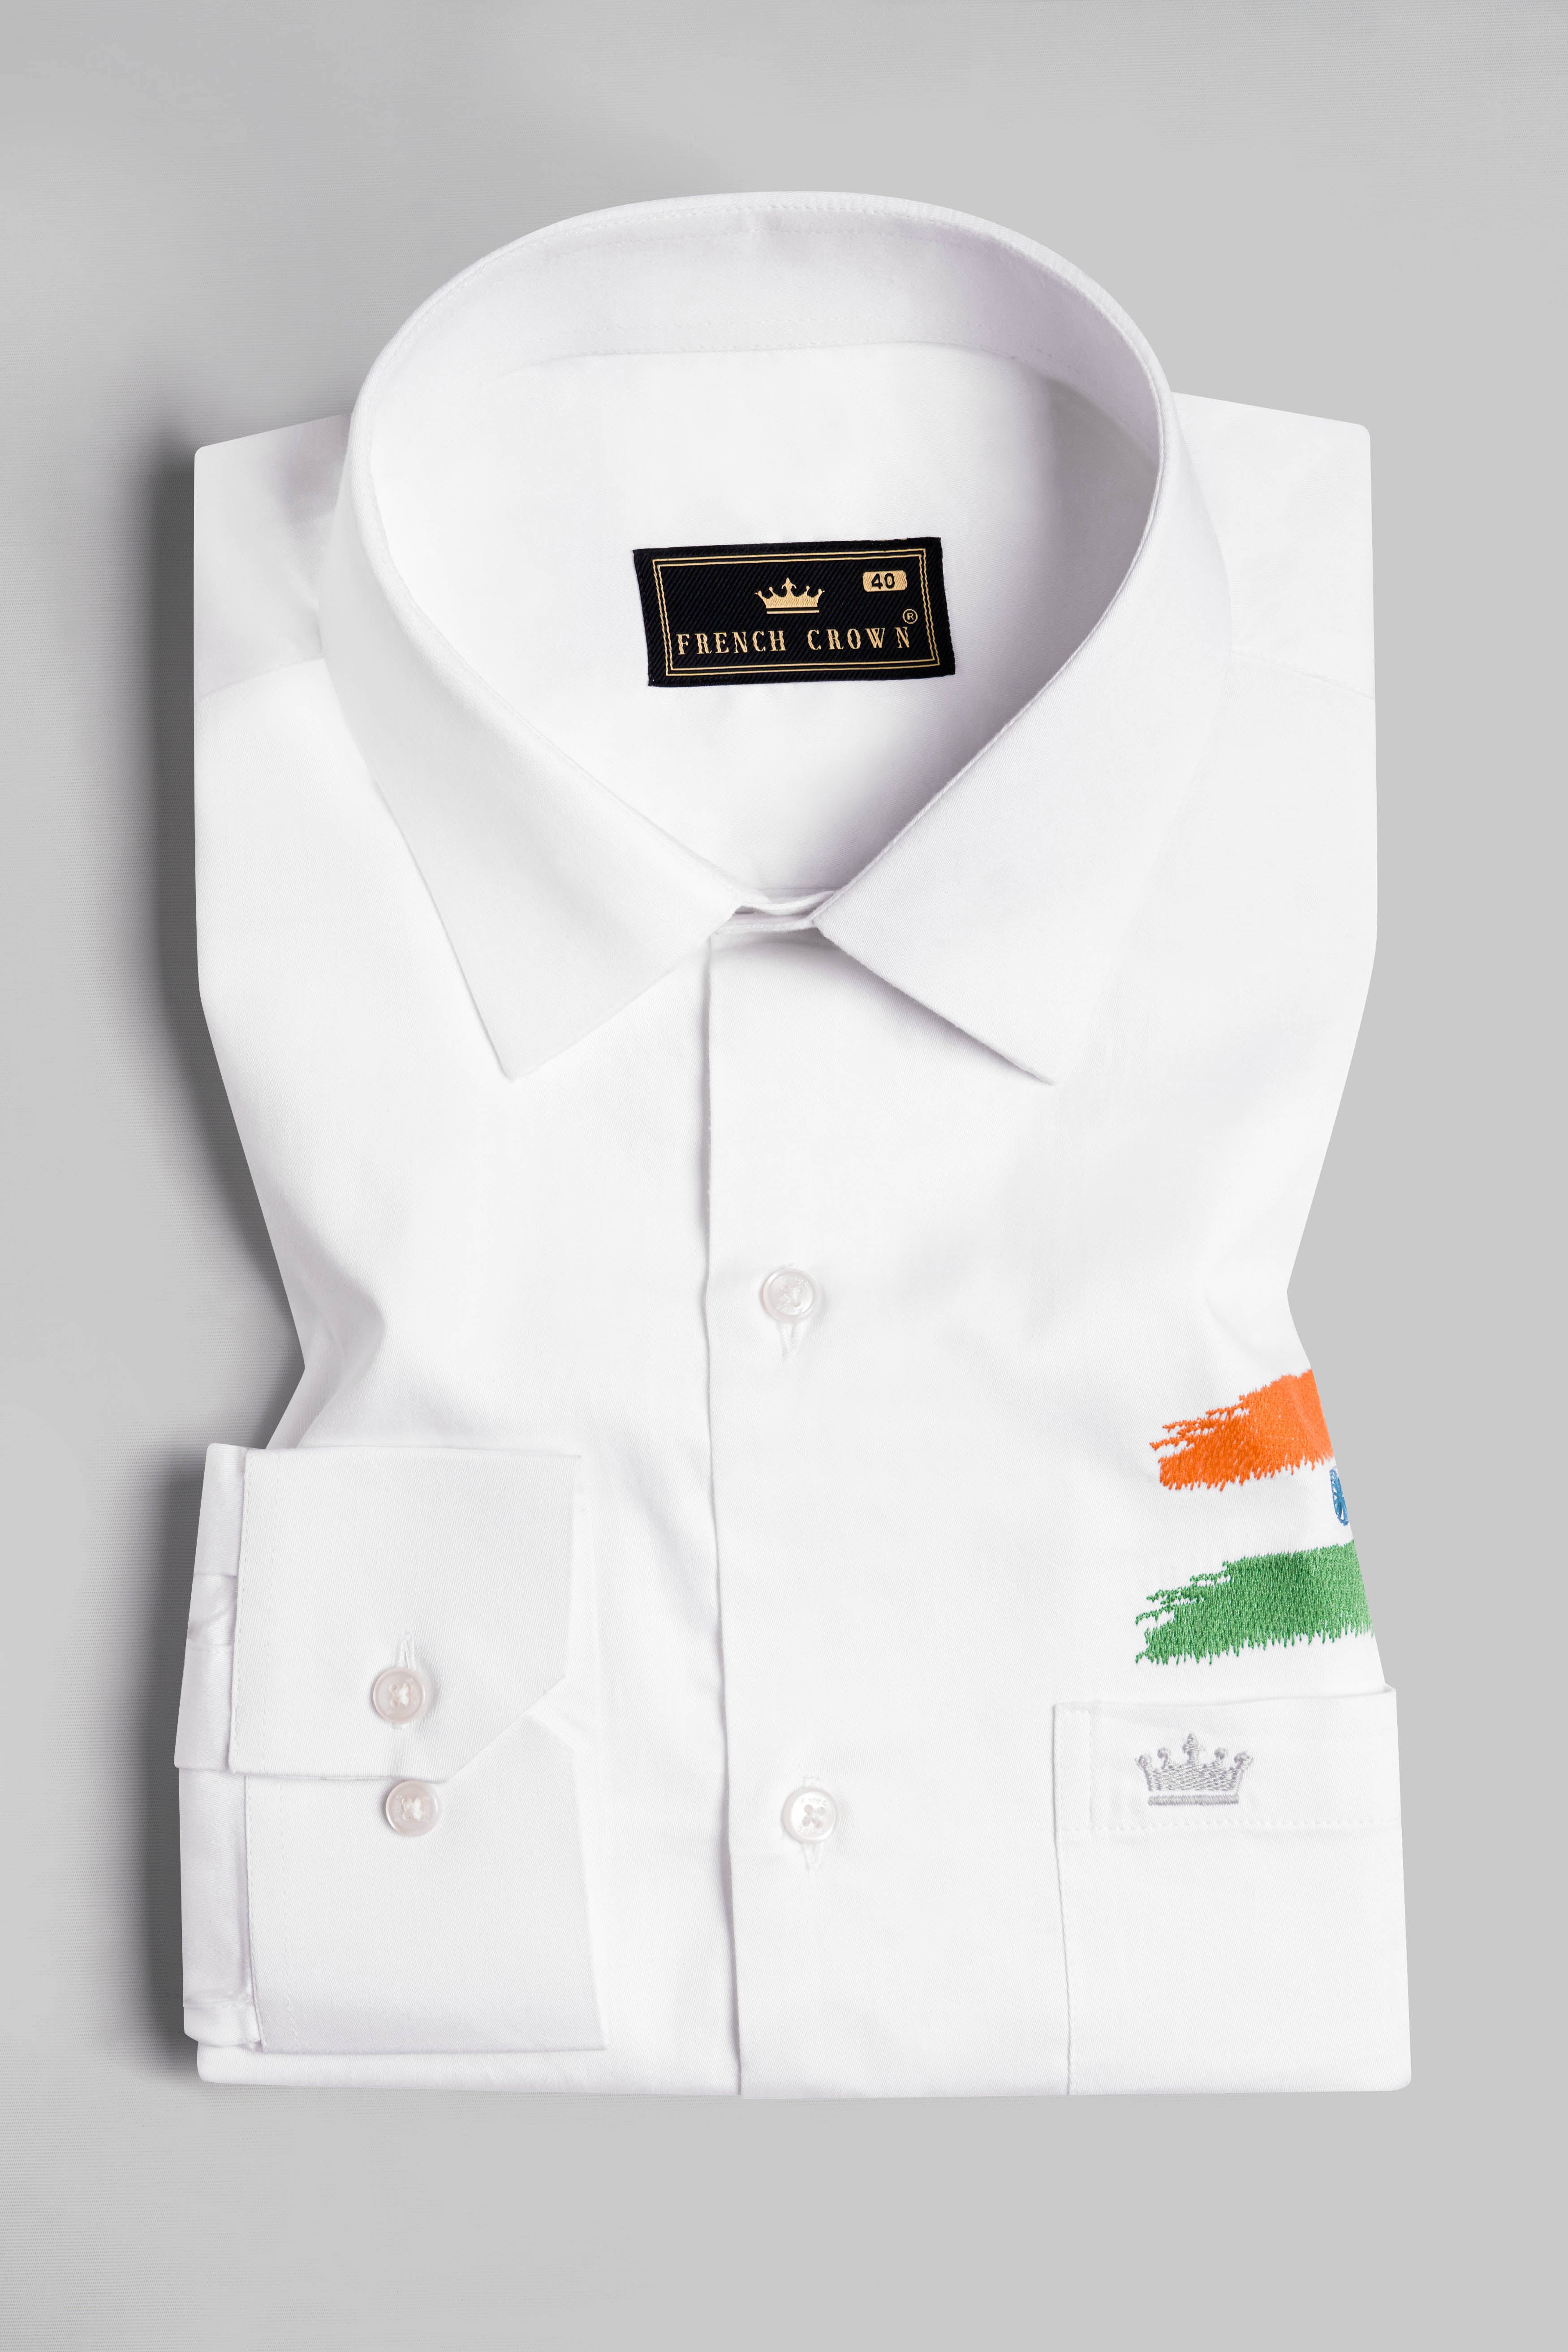 Bright White Indian Flag Embroidered Premium Cotton Designer Shirt